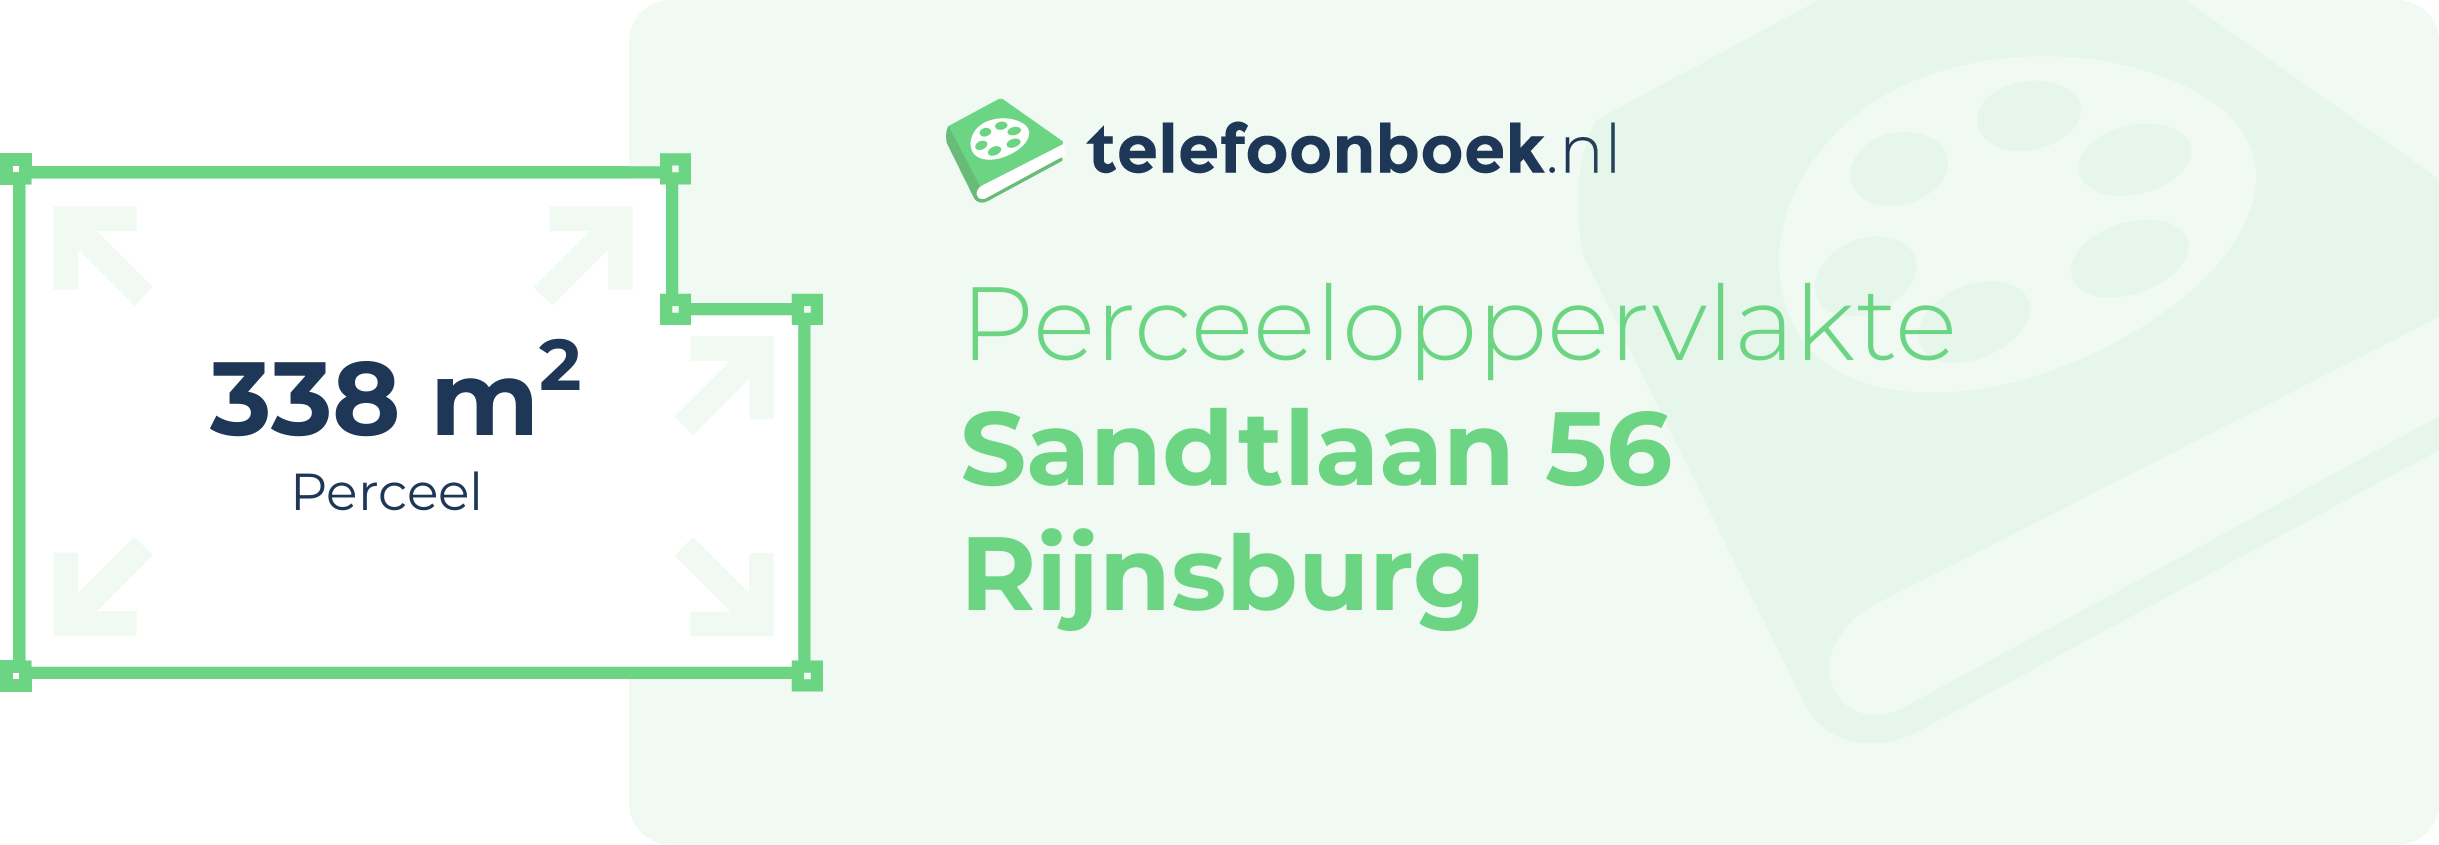 Perceeloppervlakte Sandtlaan 56 Rijnsburg